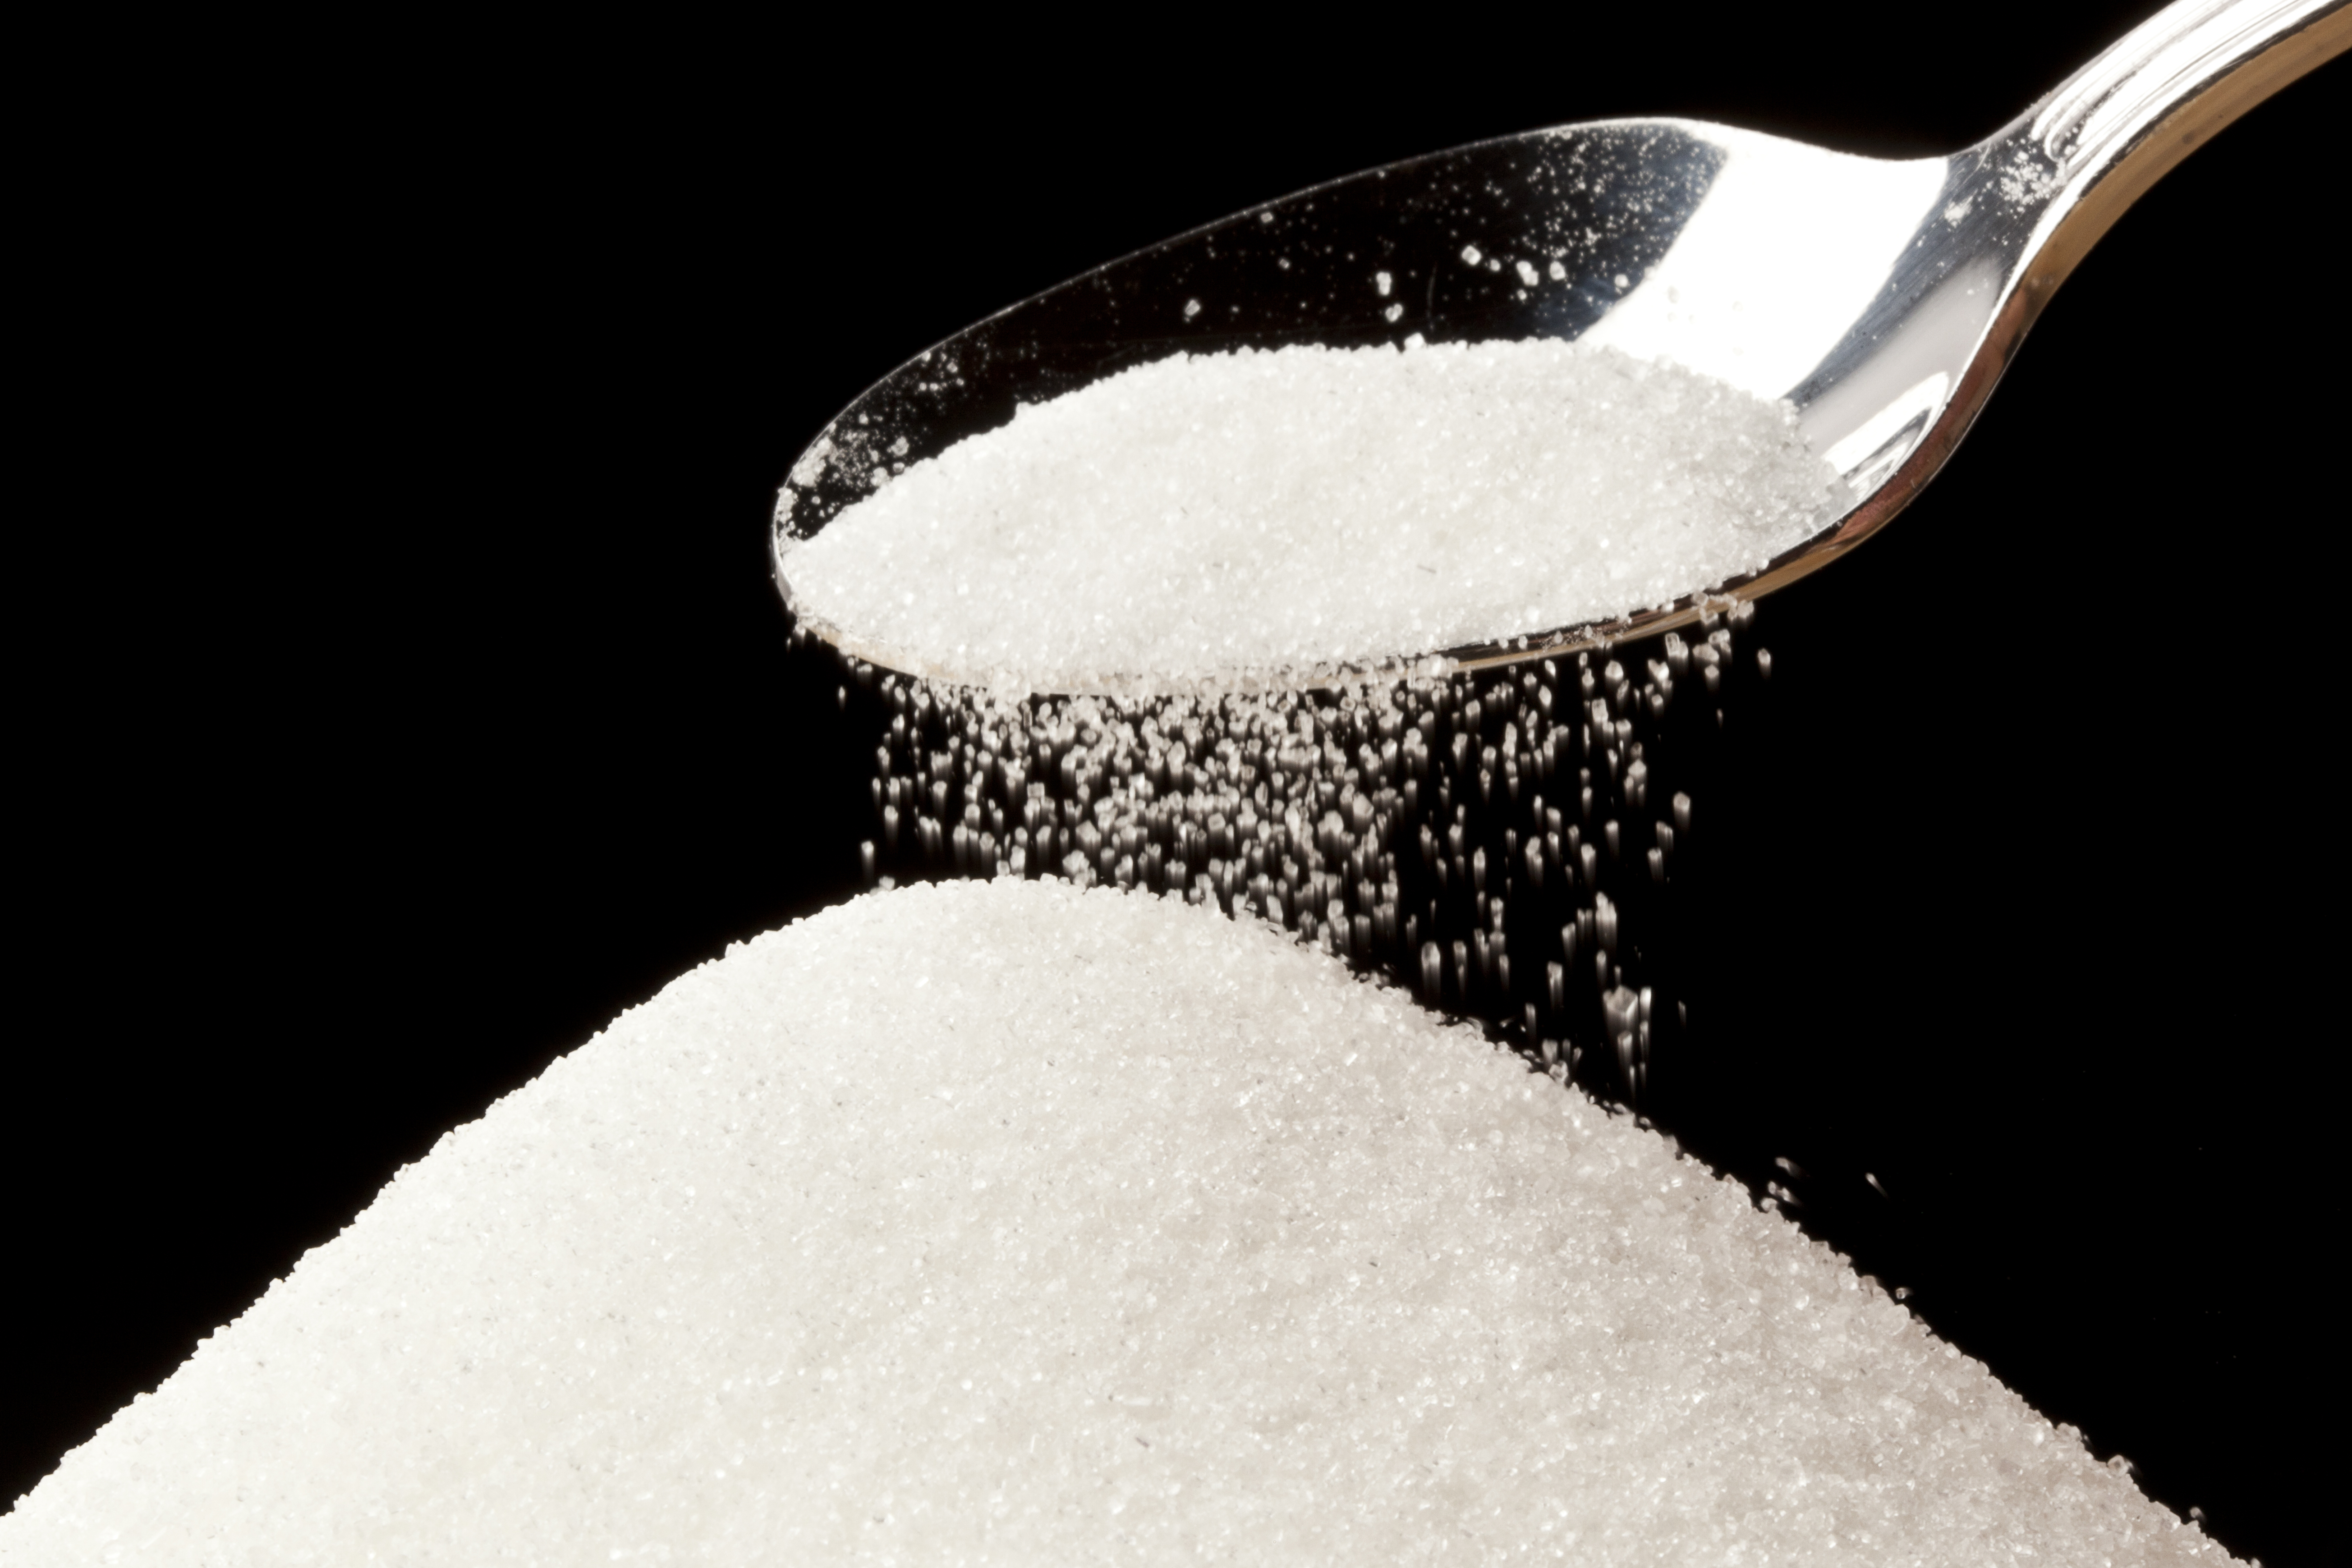 Kυβερνητικός στόχος η παραγωγή της εθνικής ποσόστωσης ζάχαρης